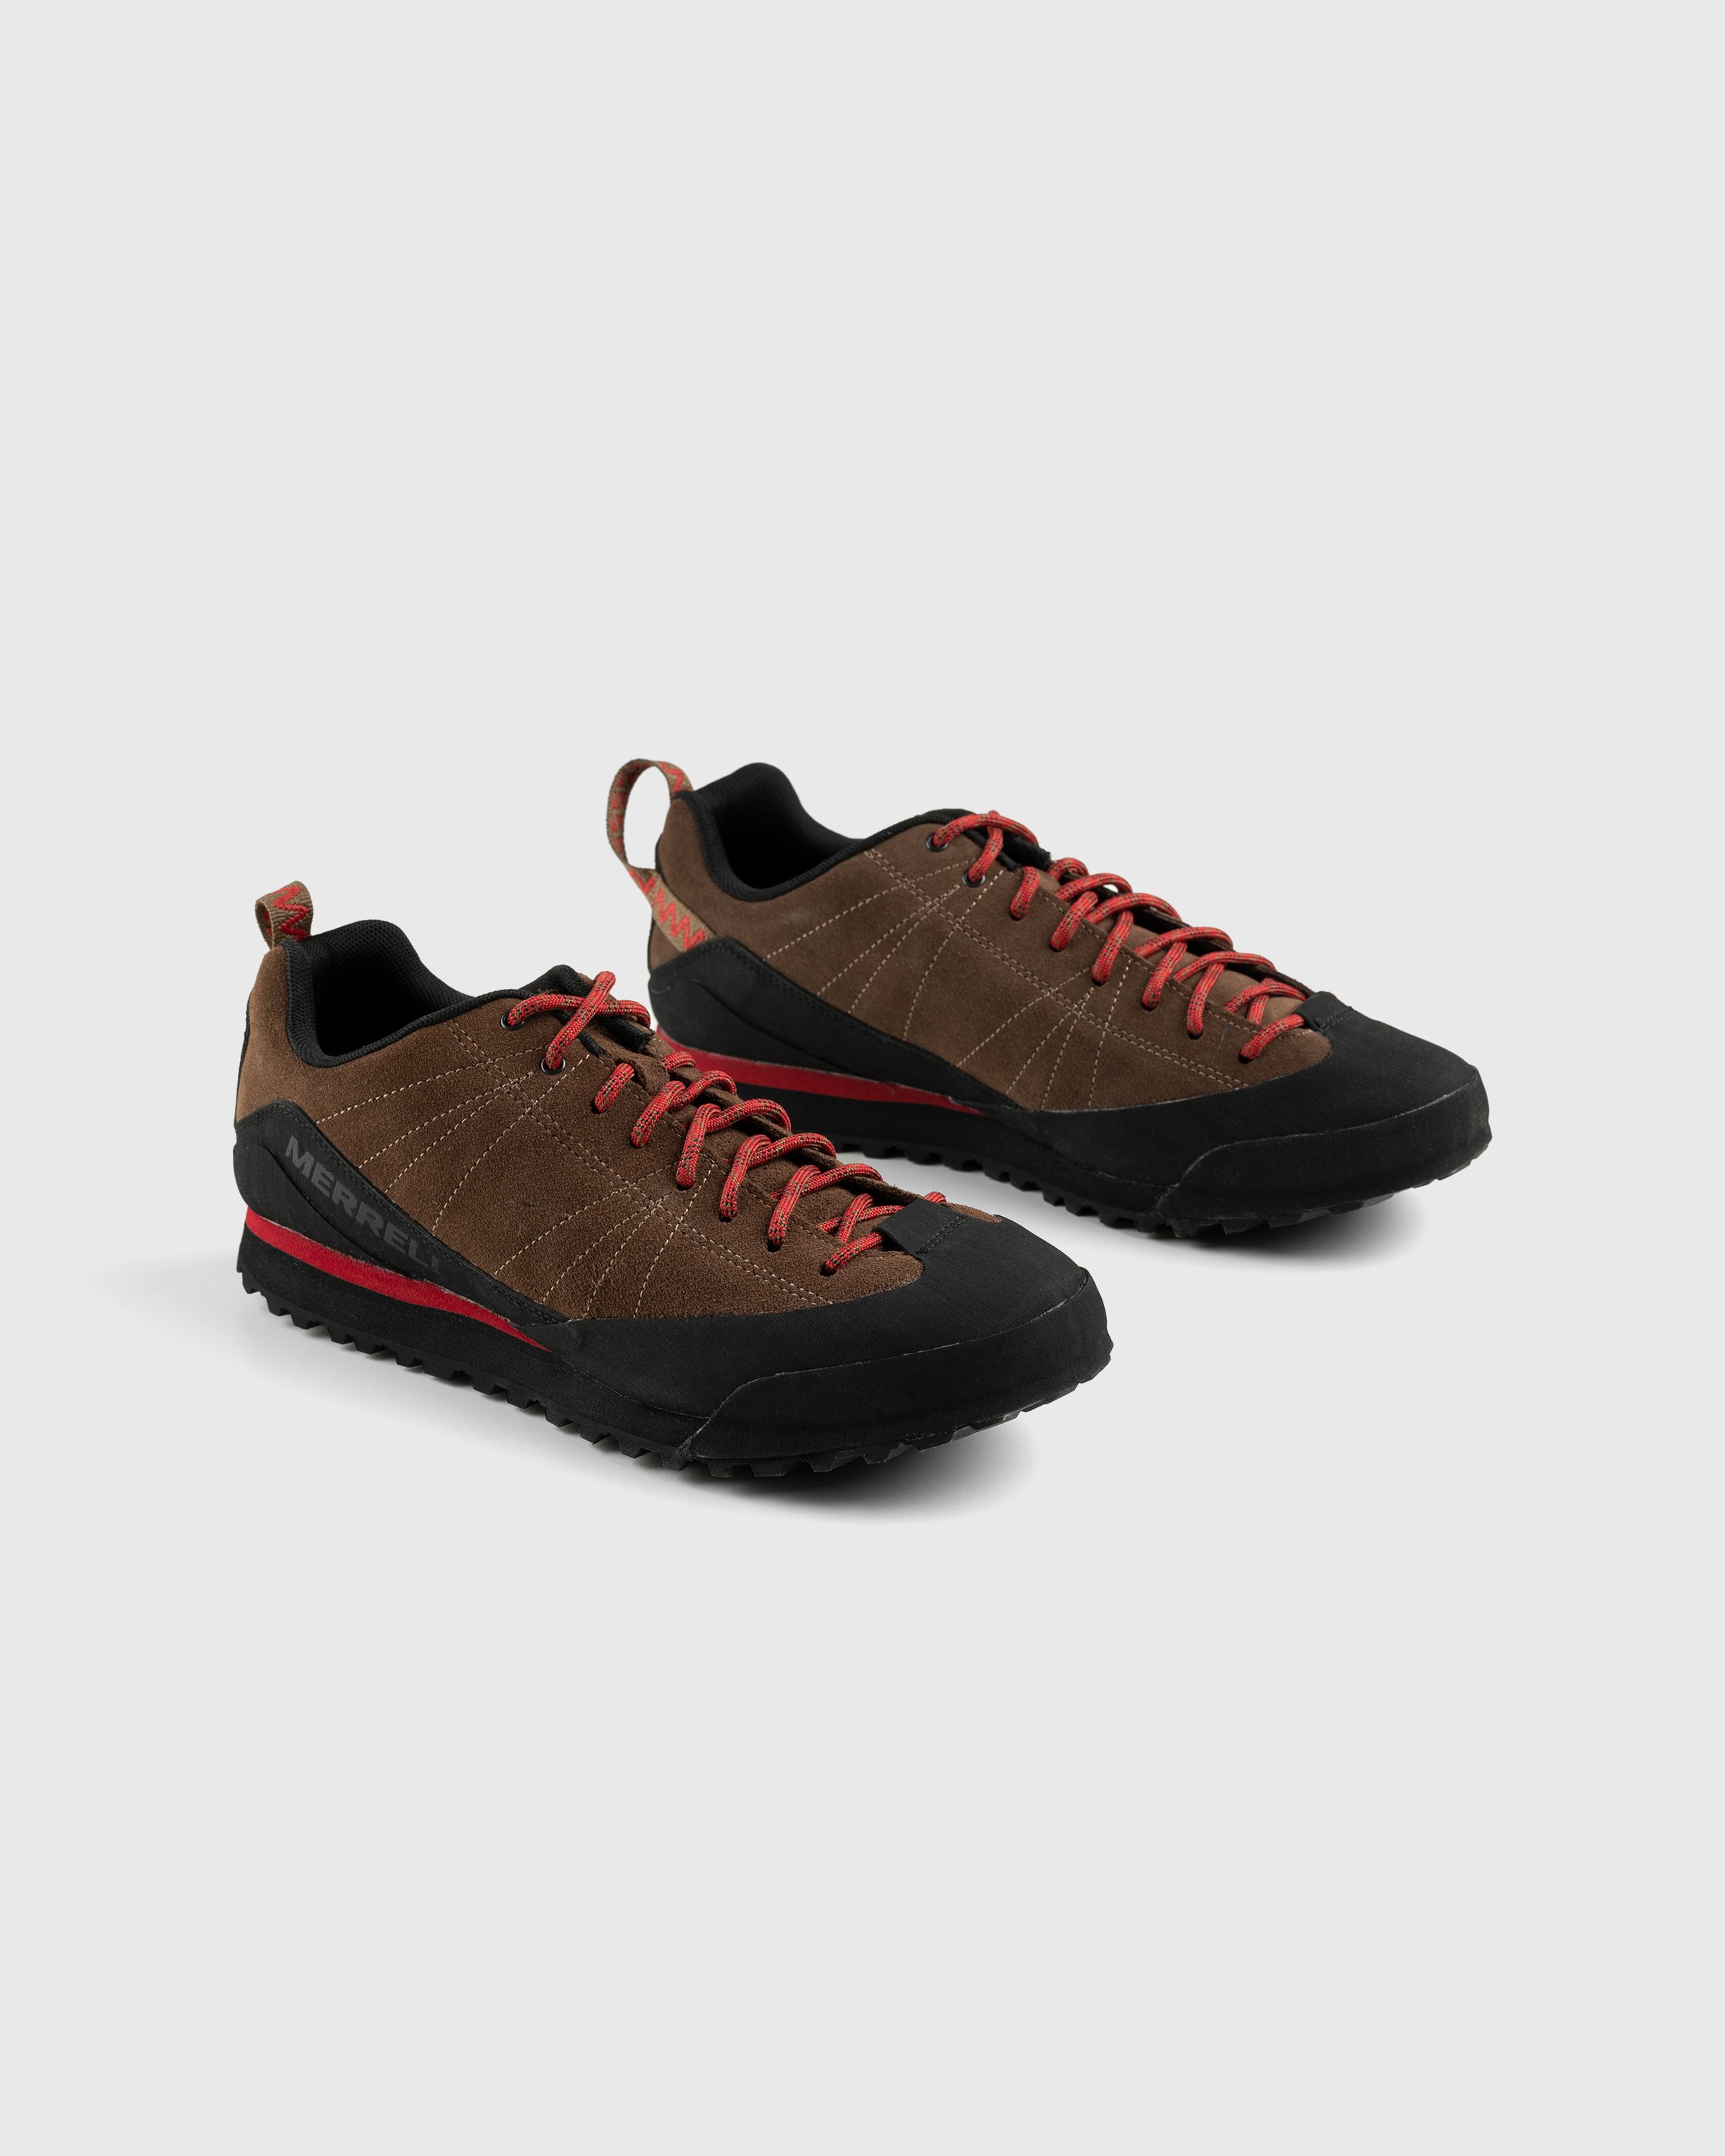 Merrell - Catalyst Pro Earth - Footwear - Brown - Image 3